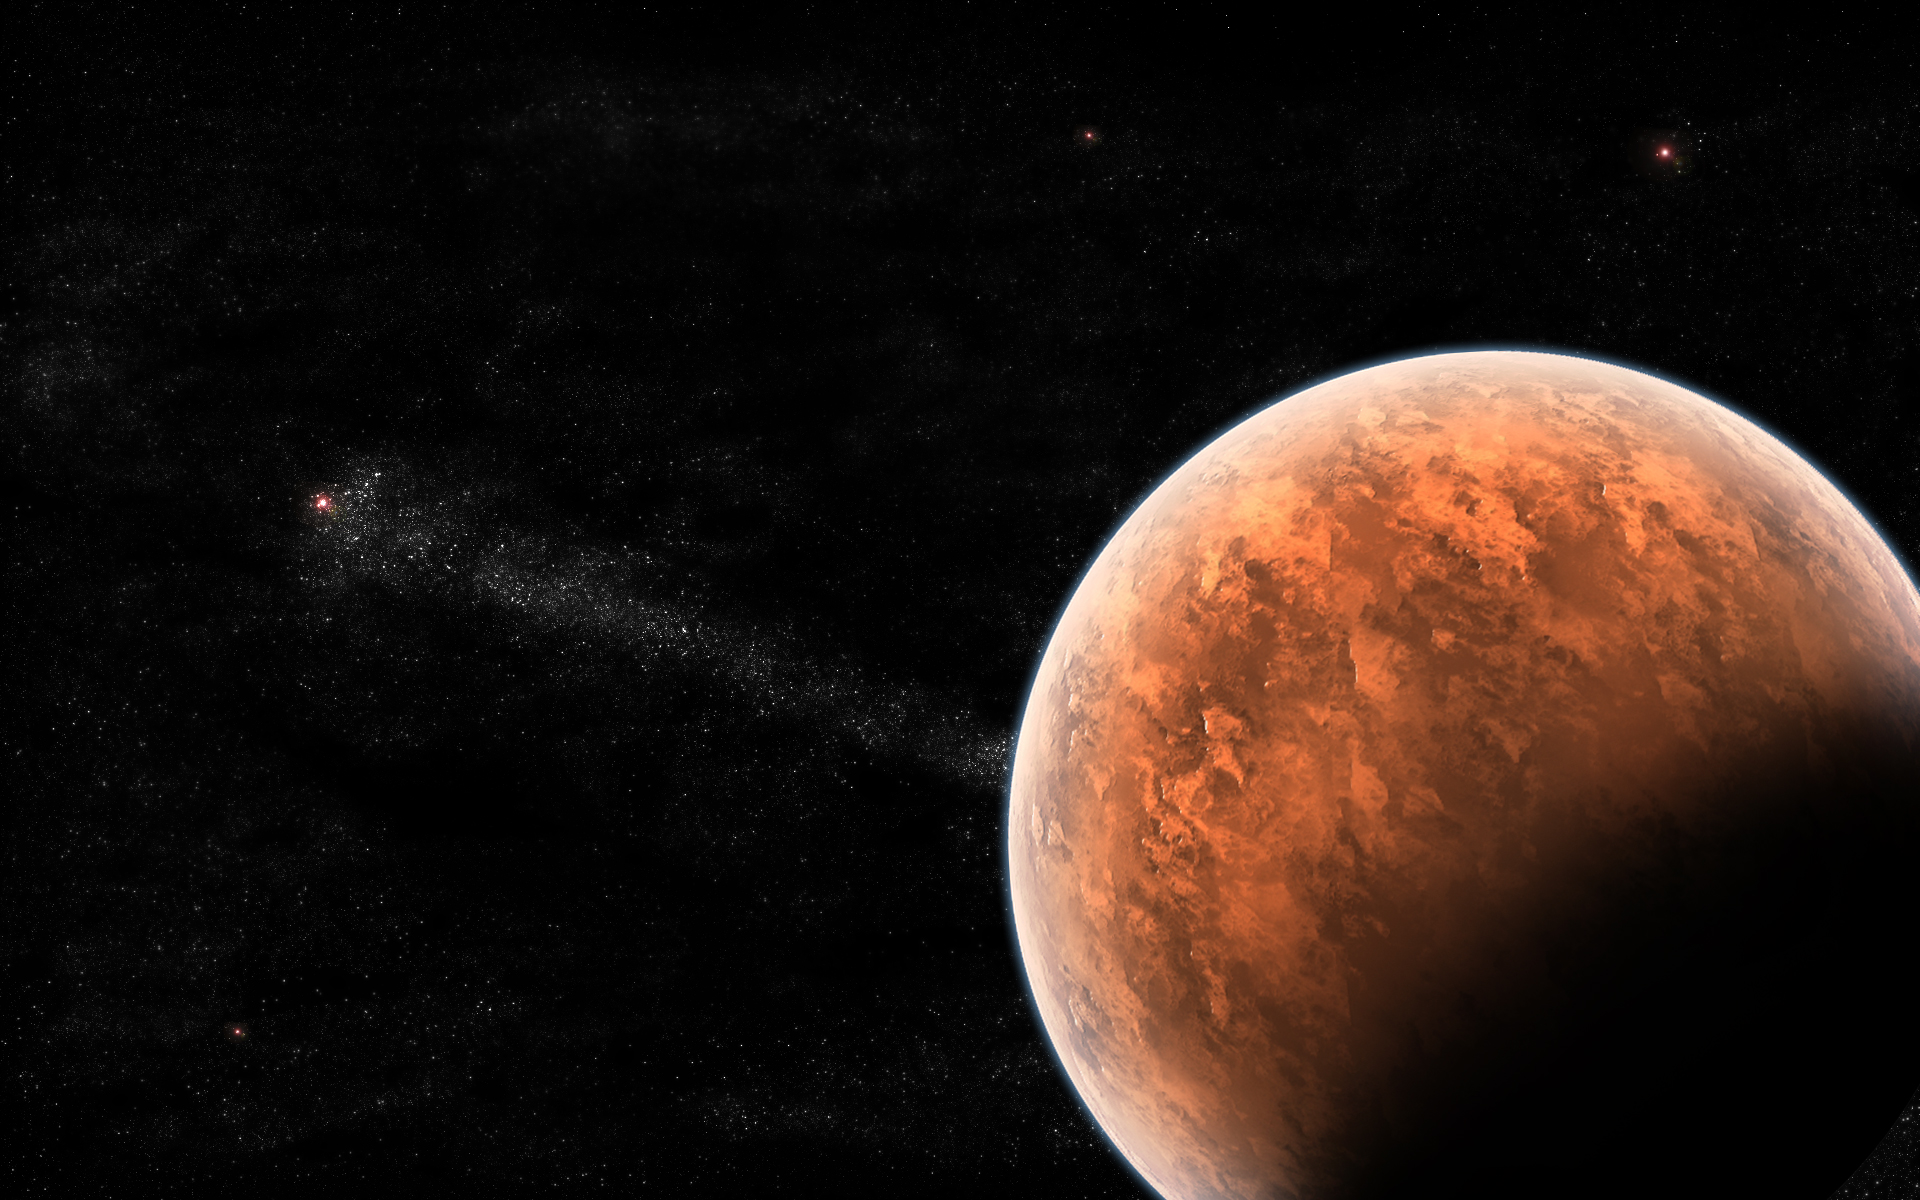 Sci Fi Planet HD Wallpaper | Background Image